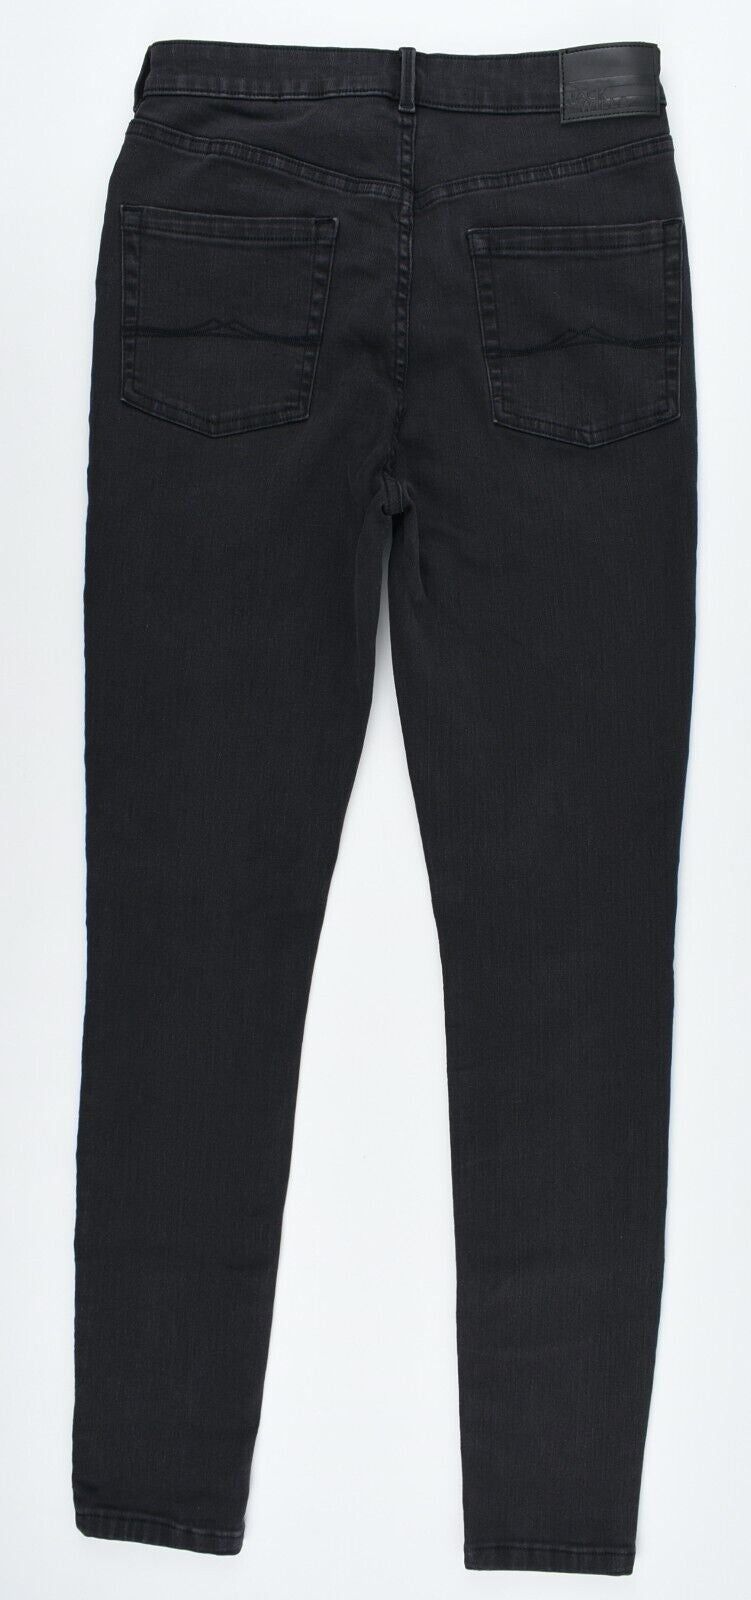 JACK WILLS Women's JAGGER High Rise Super Skinny Jeans, Black, size W28 L30